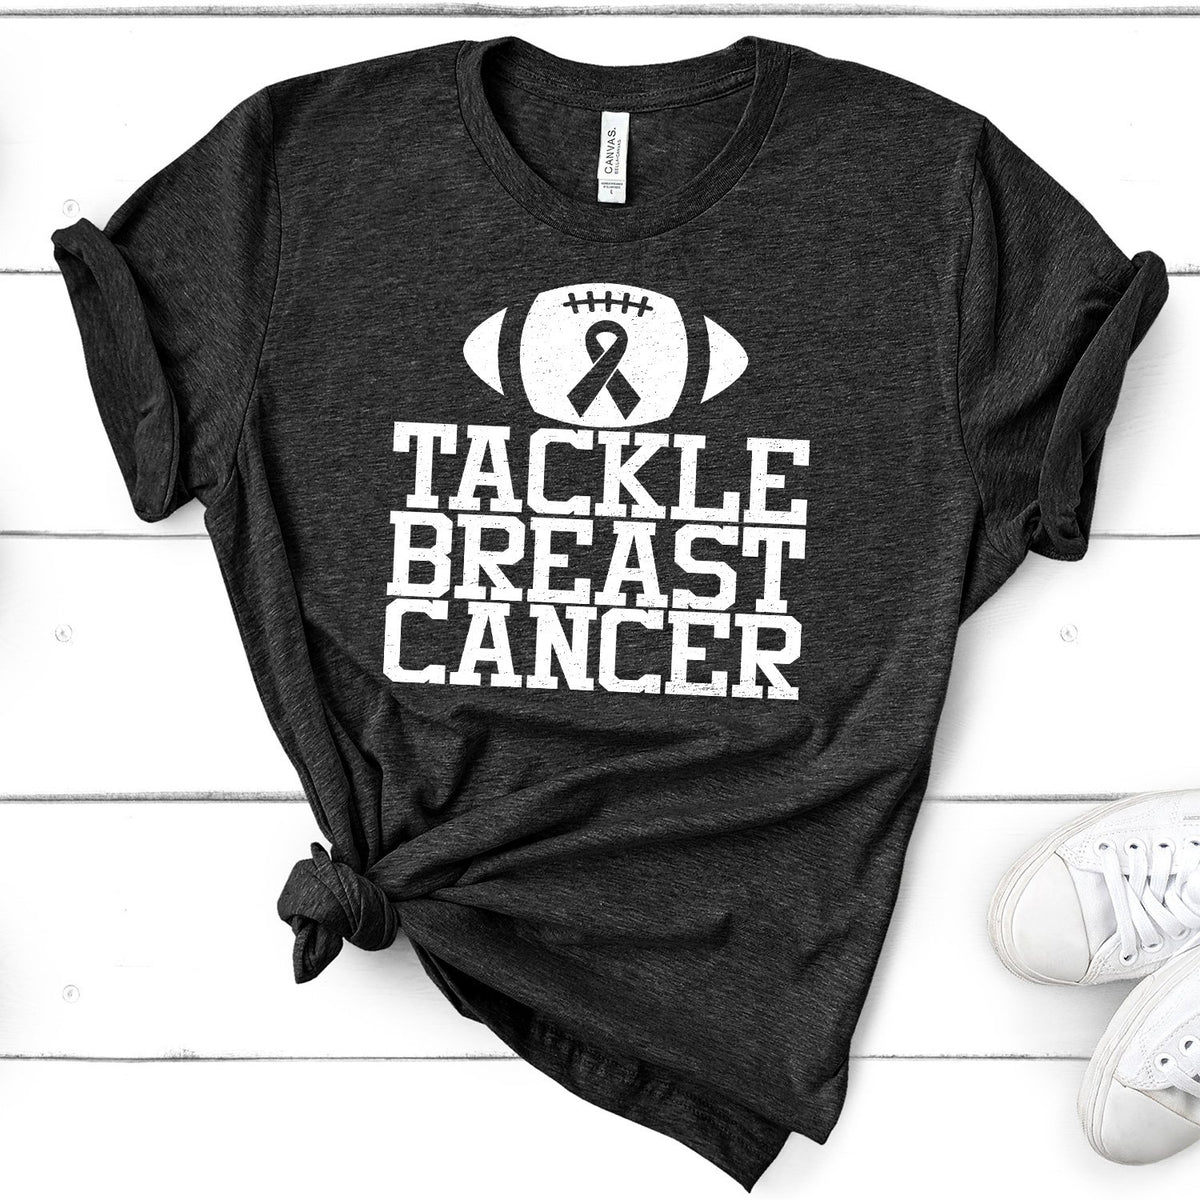 Tackle Breast Cancer - Short Sleeve Tee Shirt